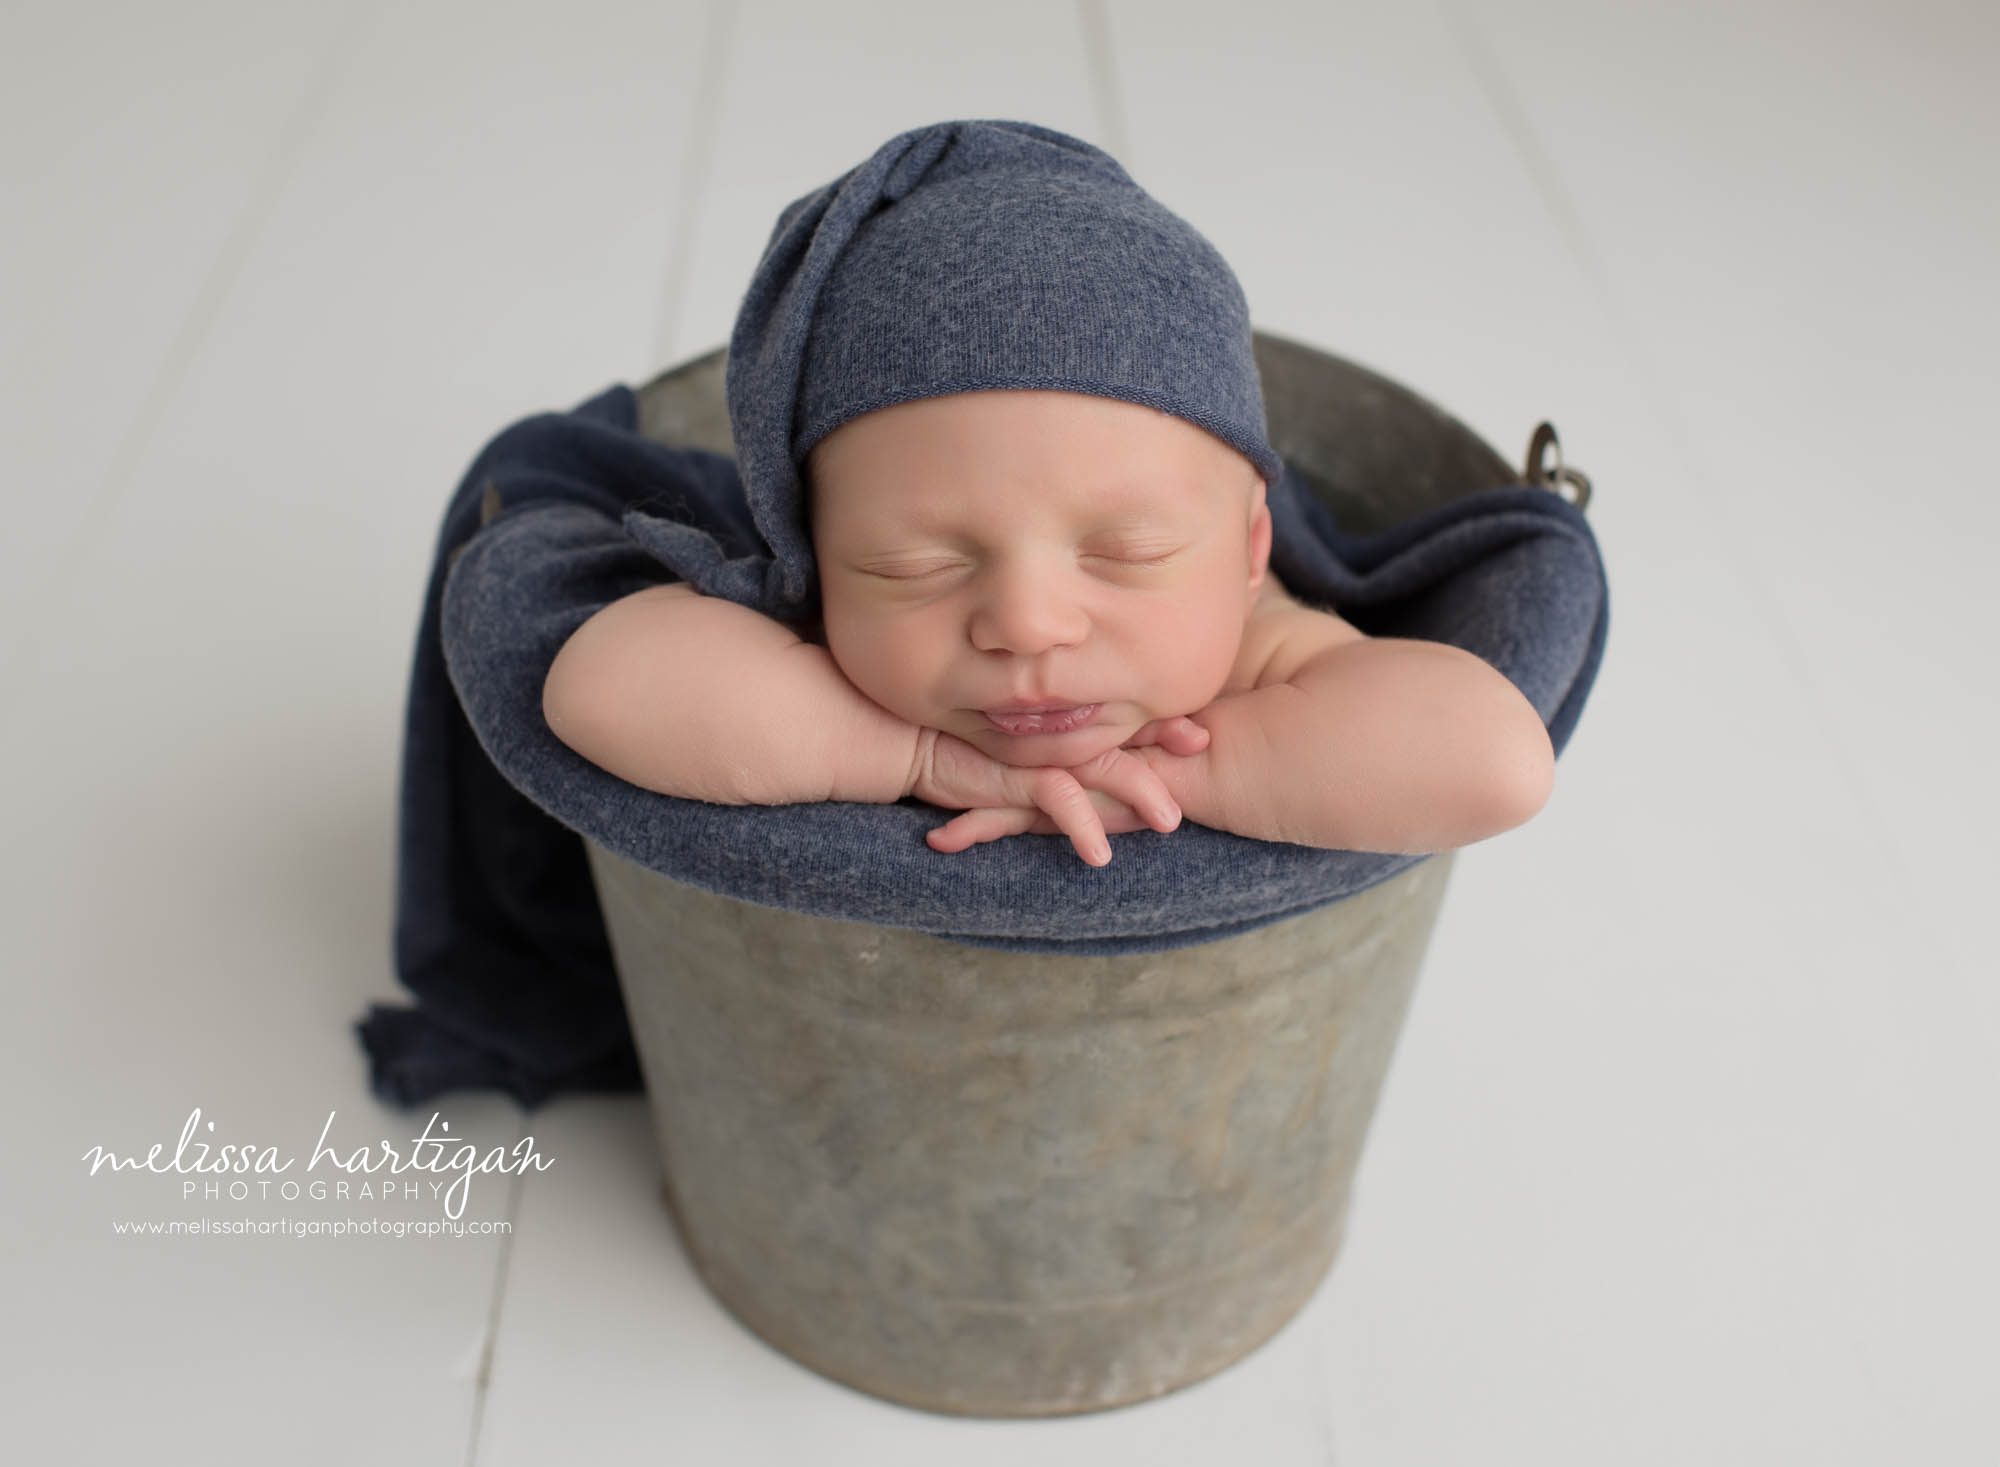 newborn baby boy posed in metal bucket with head on hands wearing navy blue sleepy cap CT newborn photography